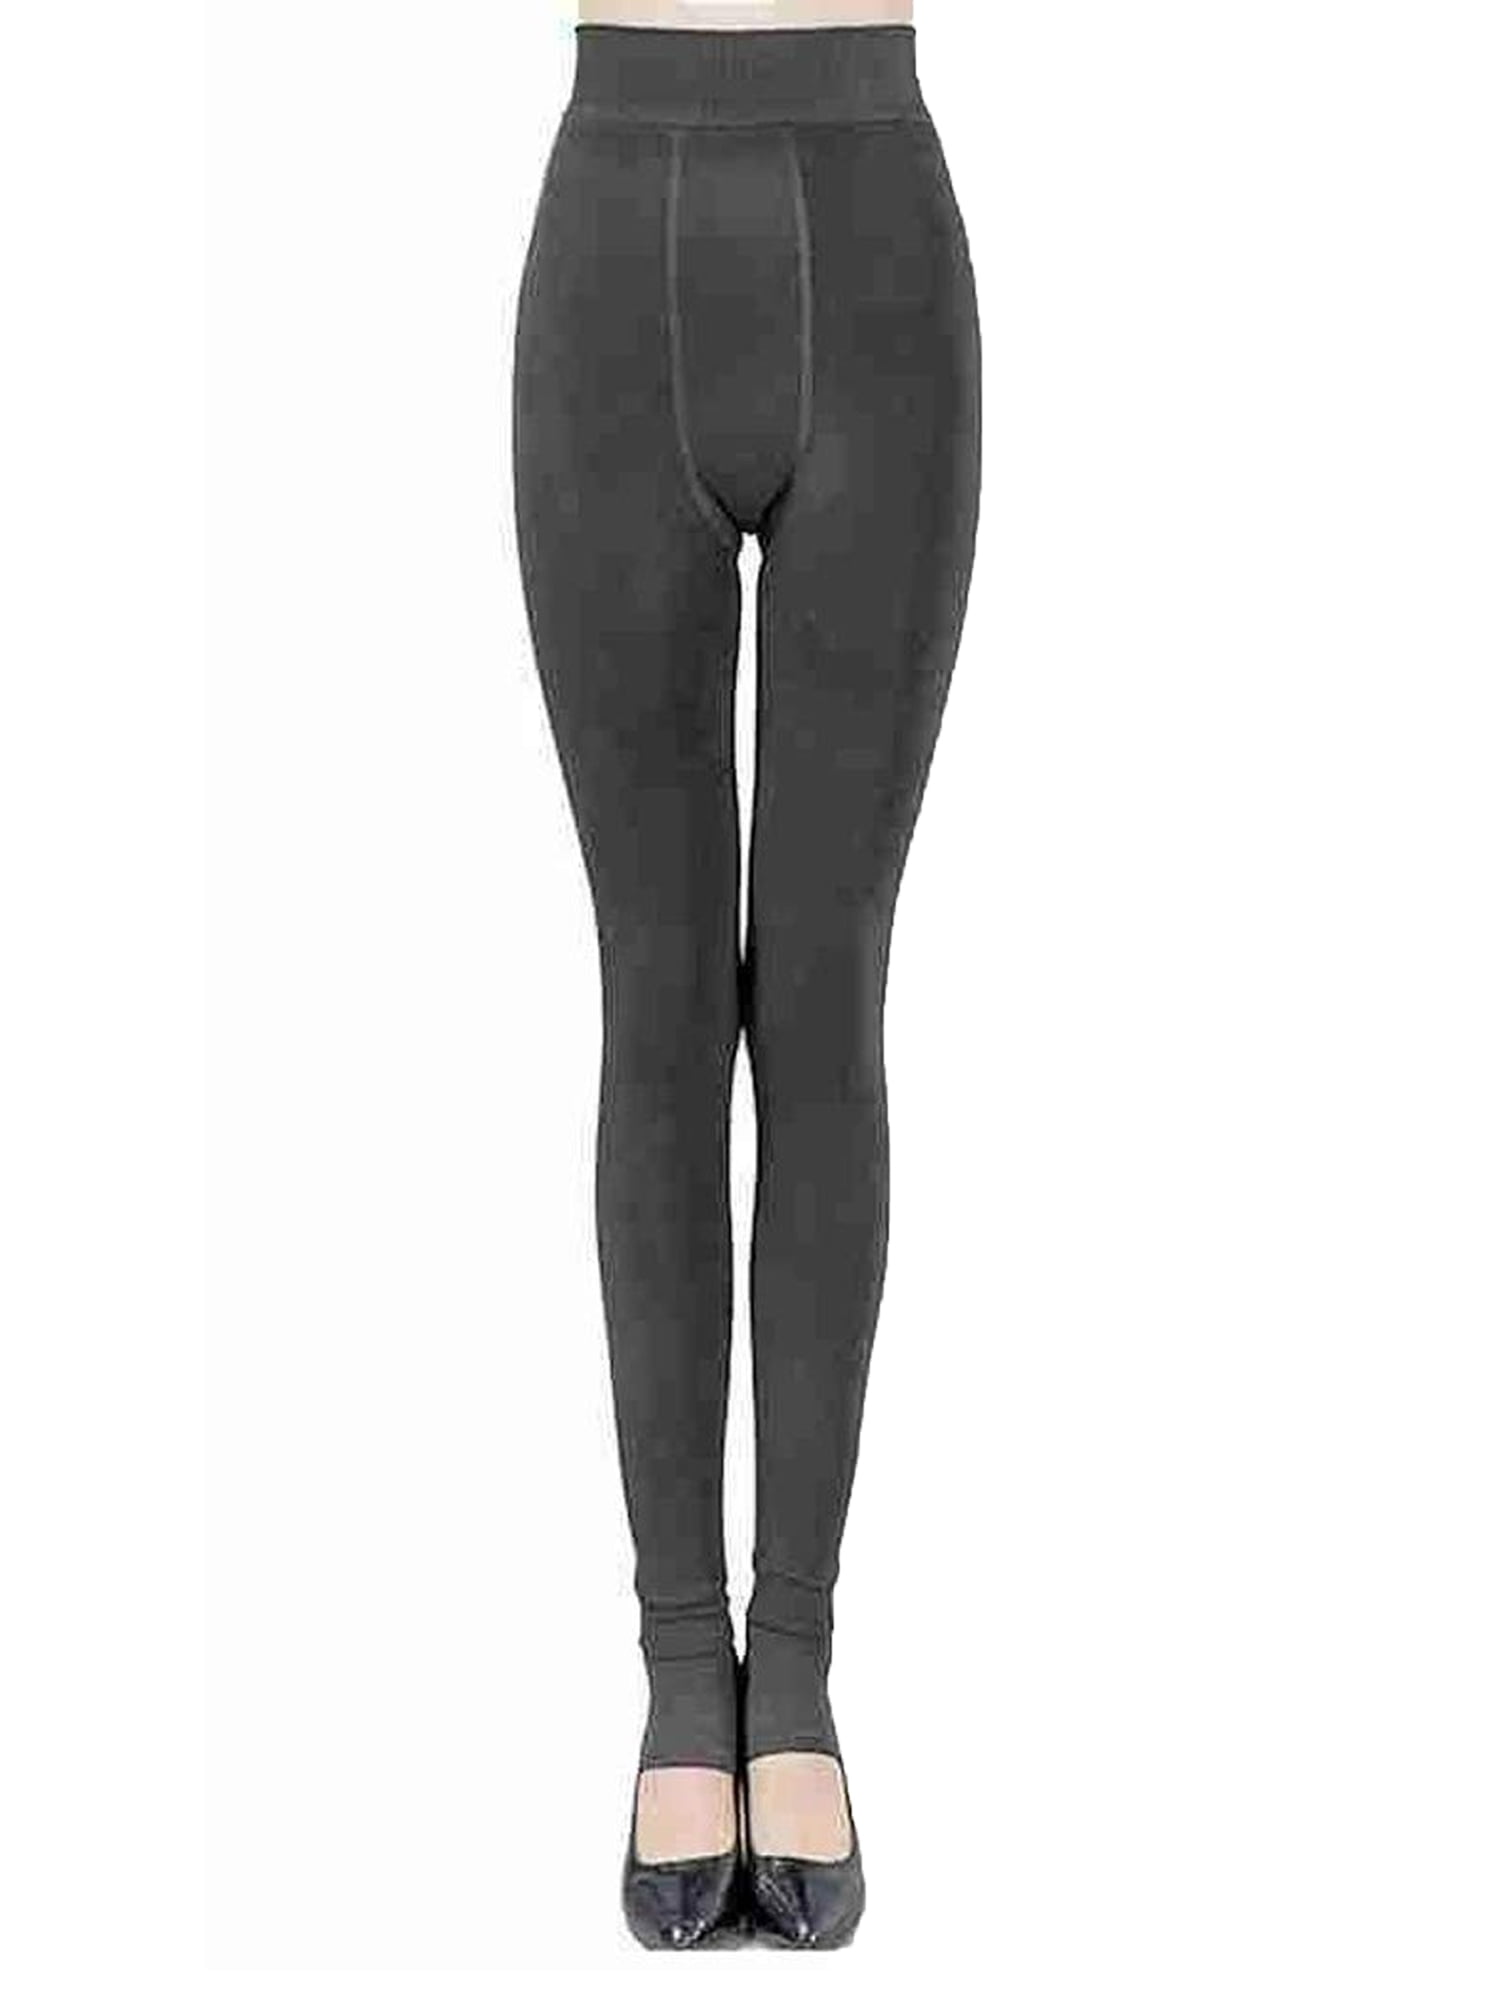 Women's Cotton Stretch Winter Warm Leggings Thermal Slim Skinny Pants Trousers 